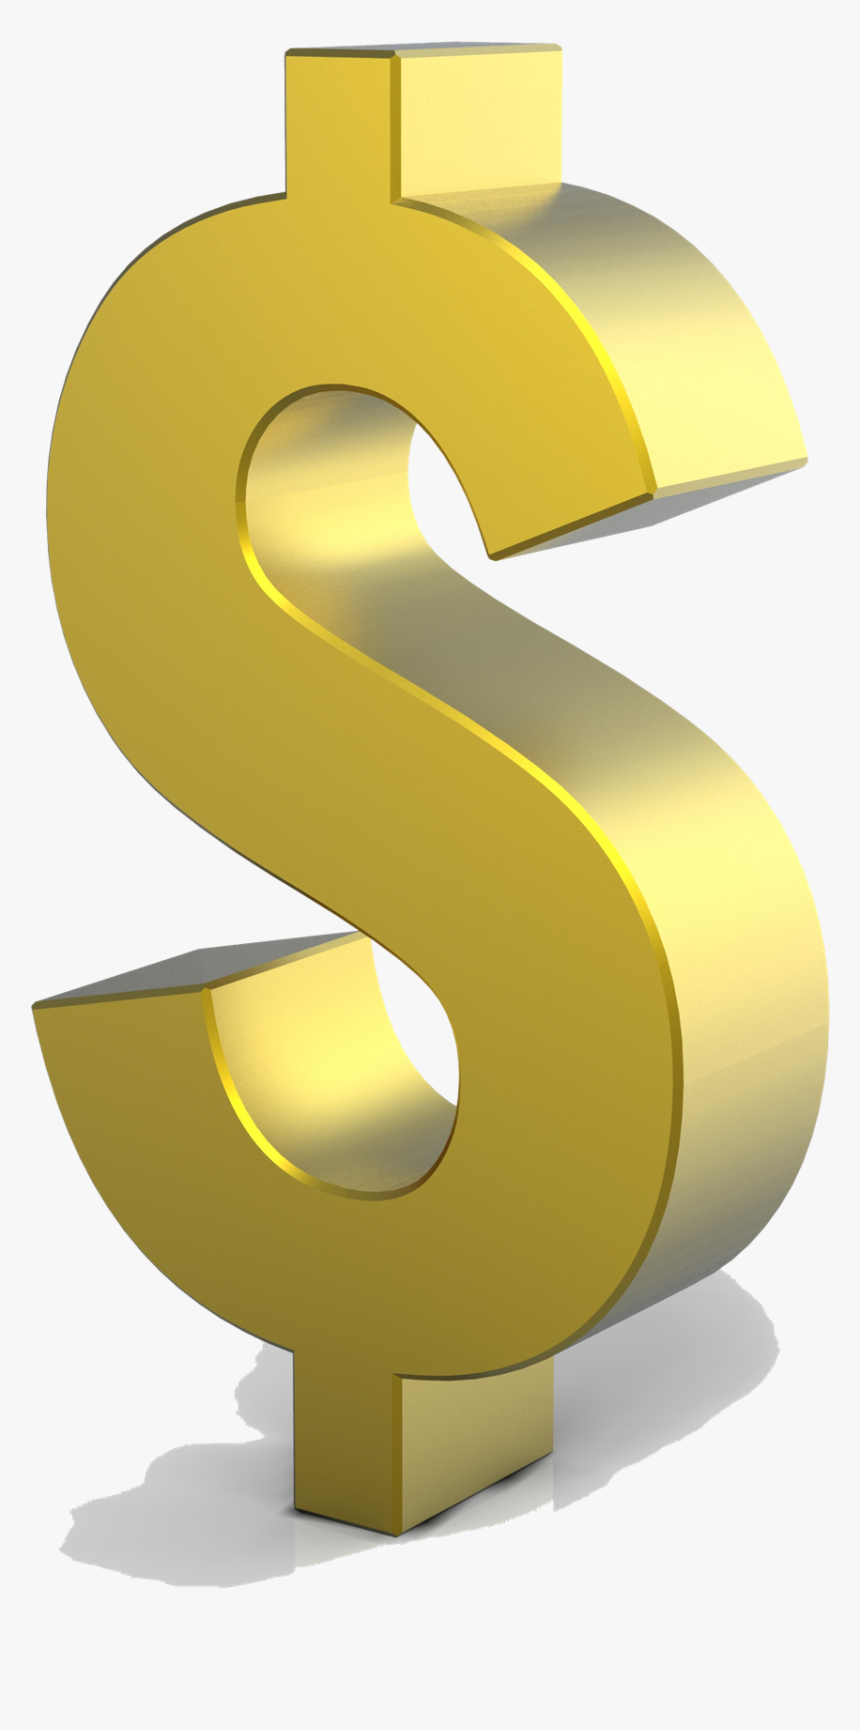 Us Dollar Logo, Logo Economic, Money Sign Logo, Logo PNG White Transparent  And Clipart Image For Free Download - Lovepik | 400231362